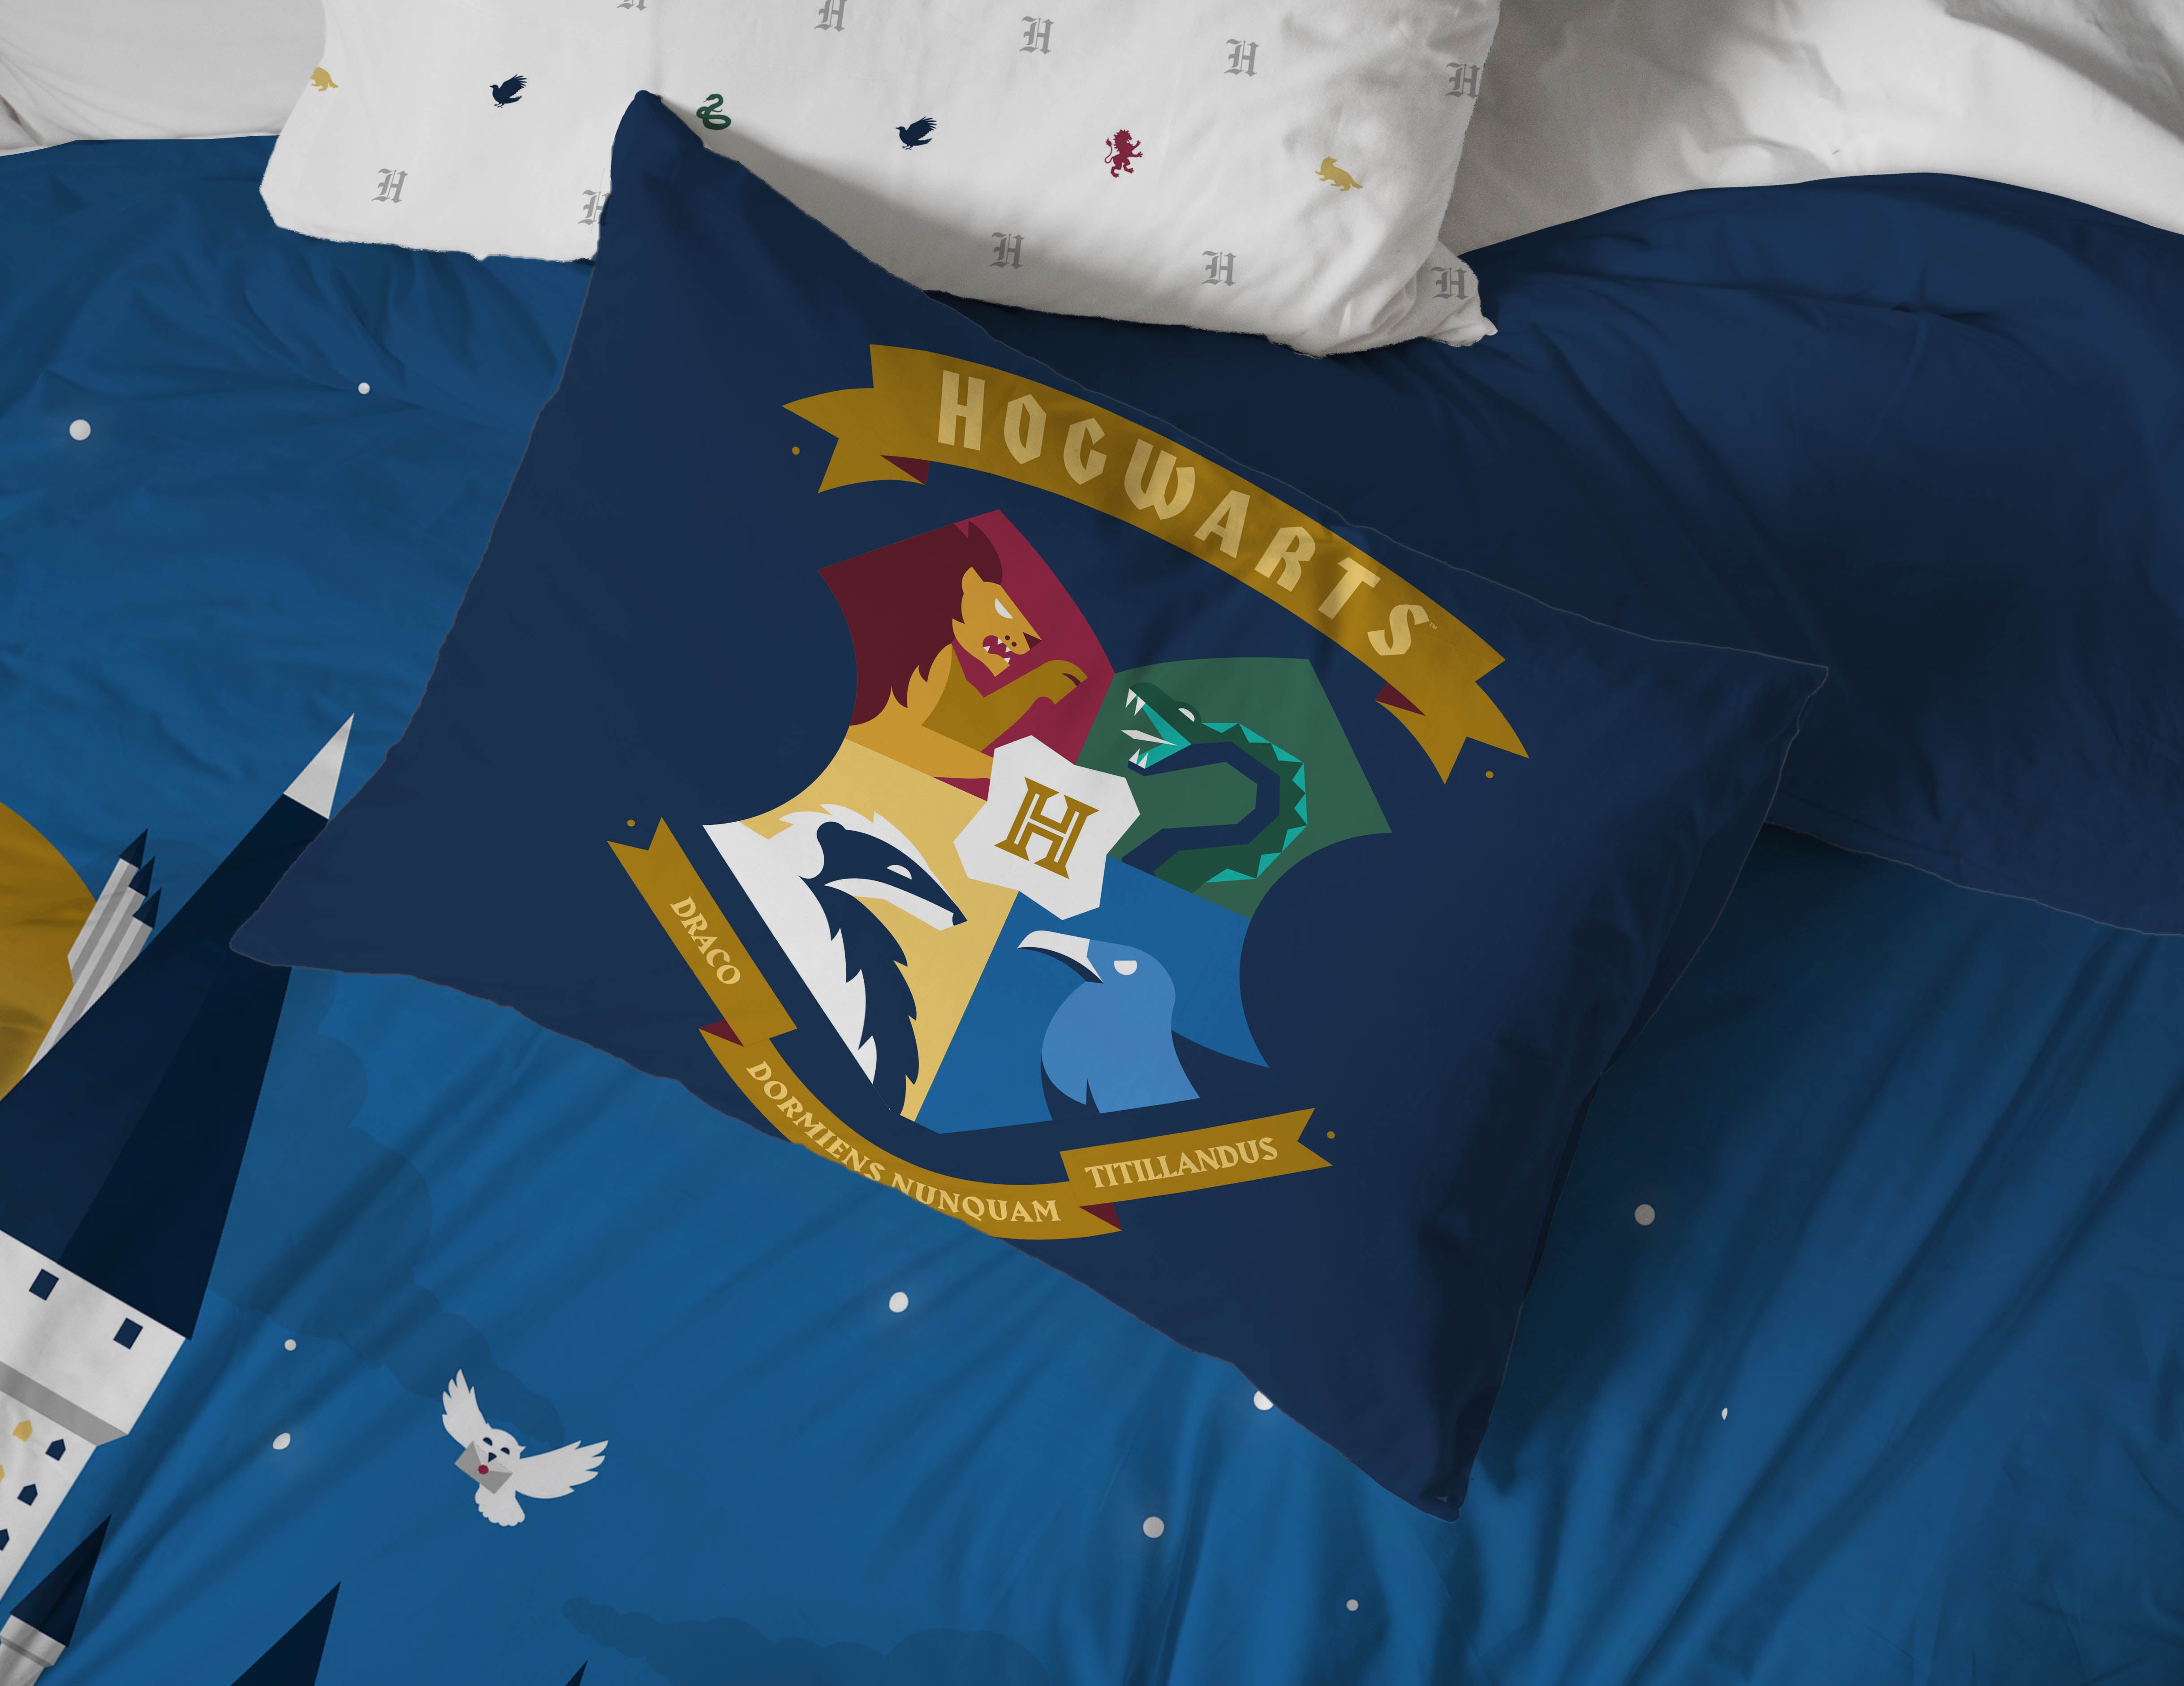 Saturday Park Harry Potter Twin Sheet Set - 3 Piece 100% Cotton Bedding -  Oeko-TEX Certified (Harry Potter Official)